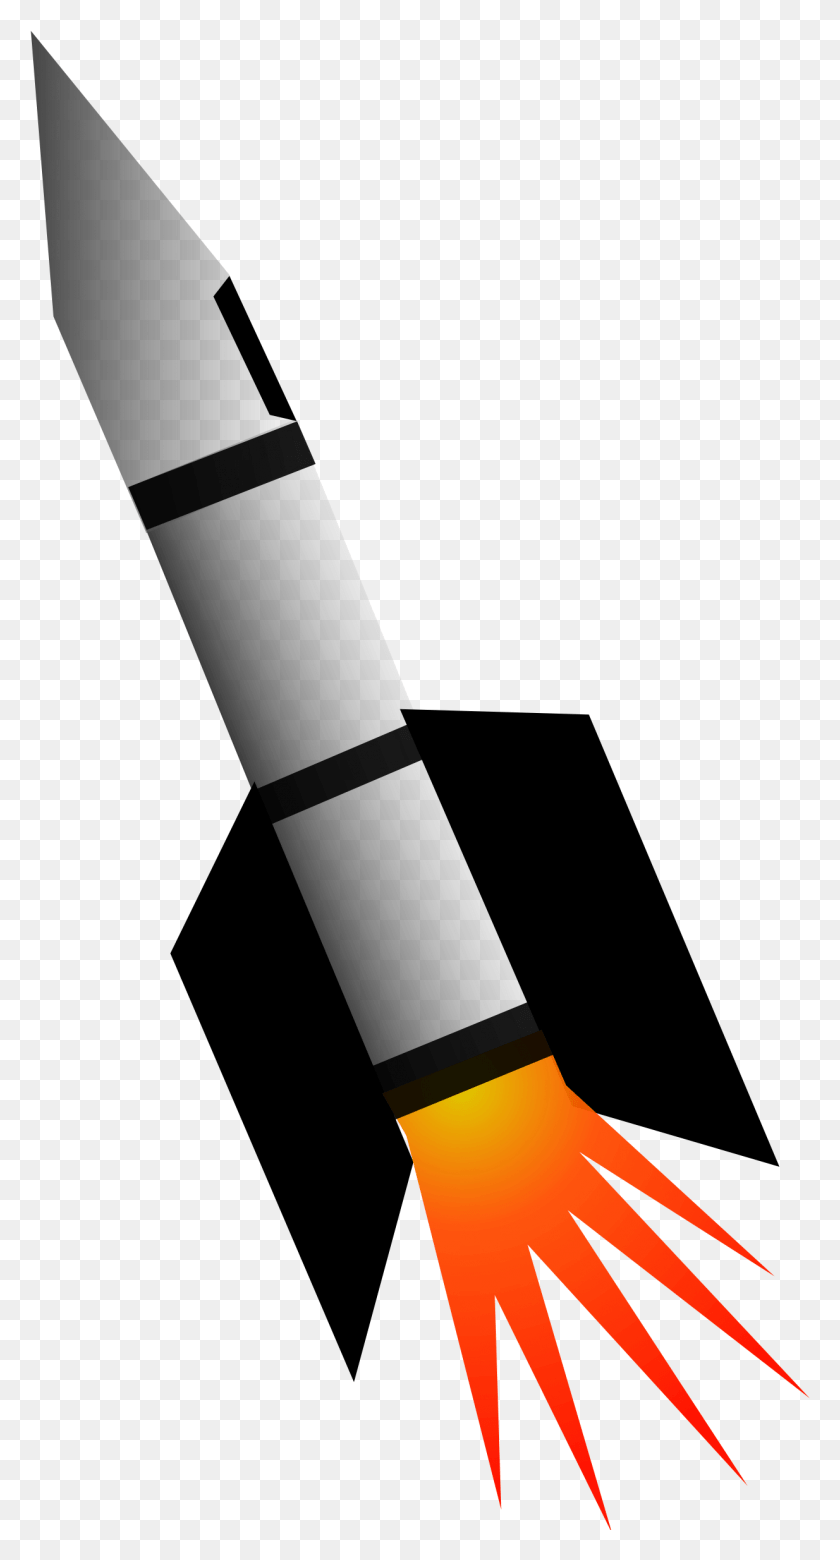 1234x2374 This Free Icons Design Of The Rocket Missile Clipart, Arma, Armamento, Fotografía Hd Png Descargar